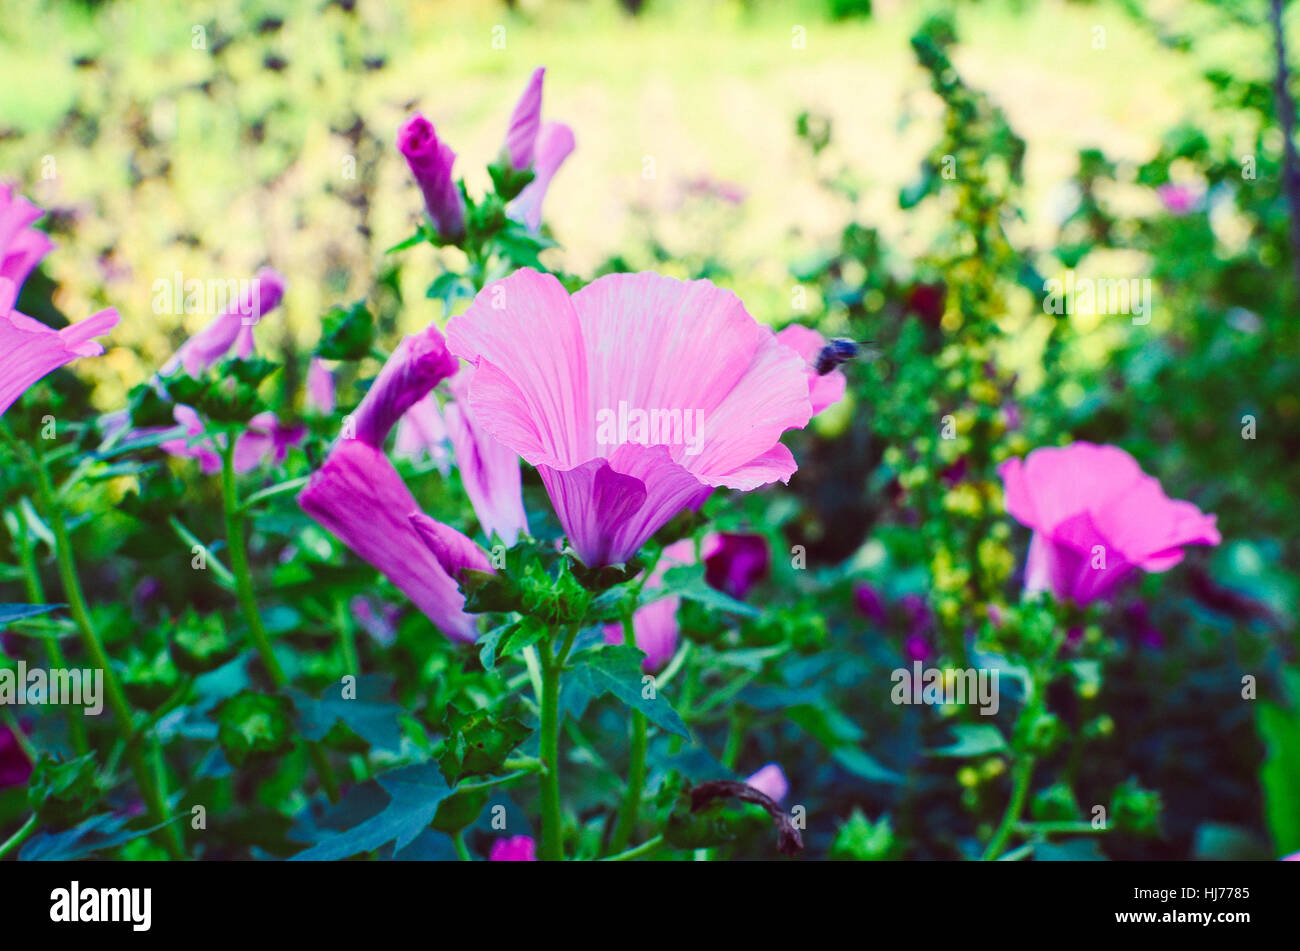 big beautiful pink flowers of Lavatera closeup on the blurry background. Stock Photo